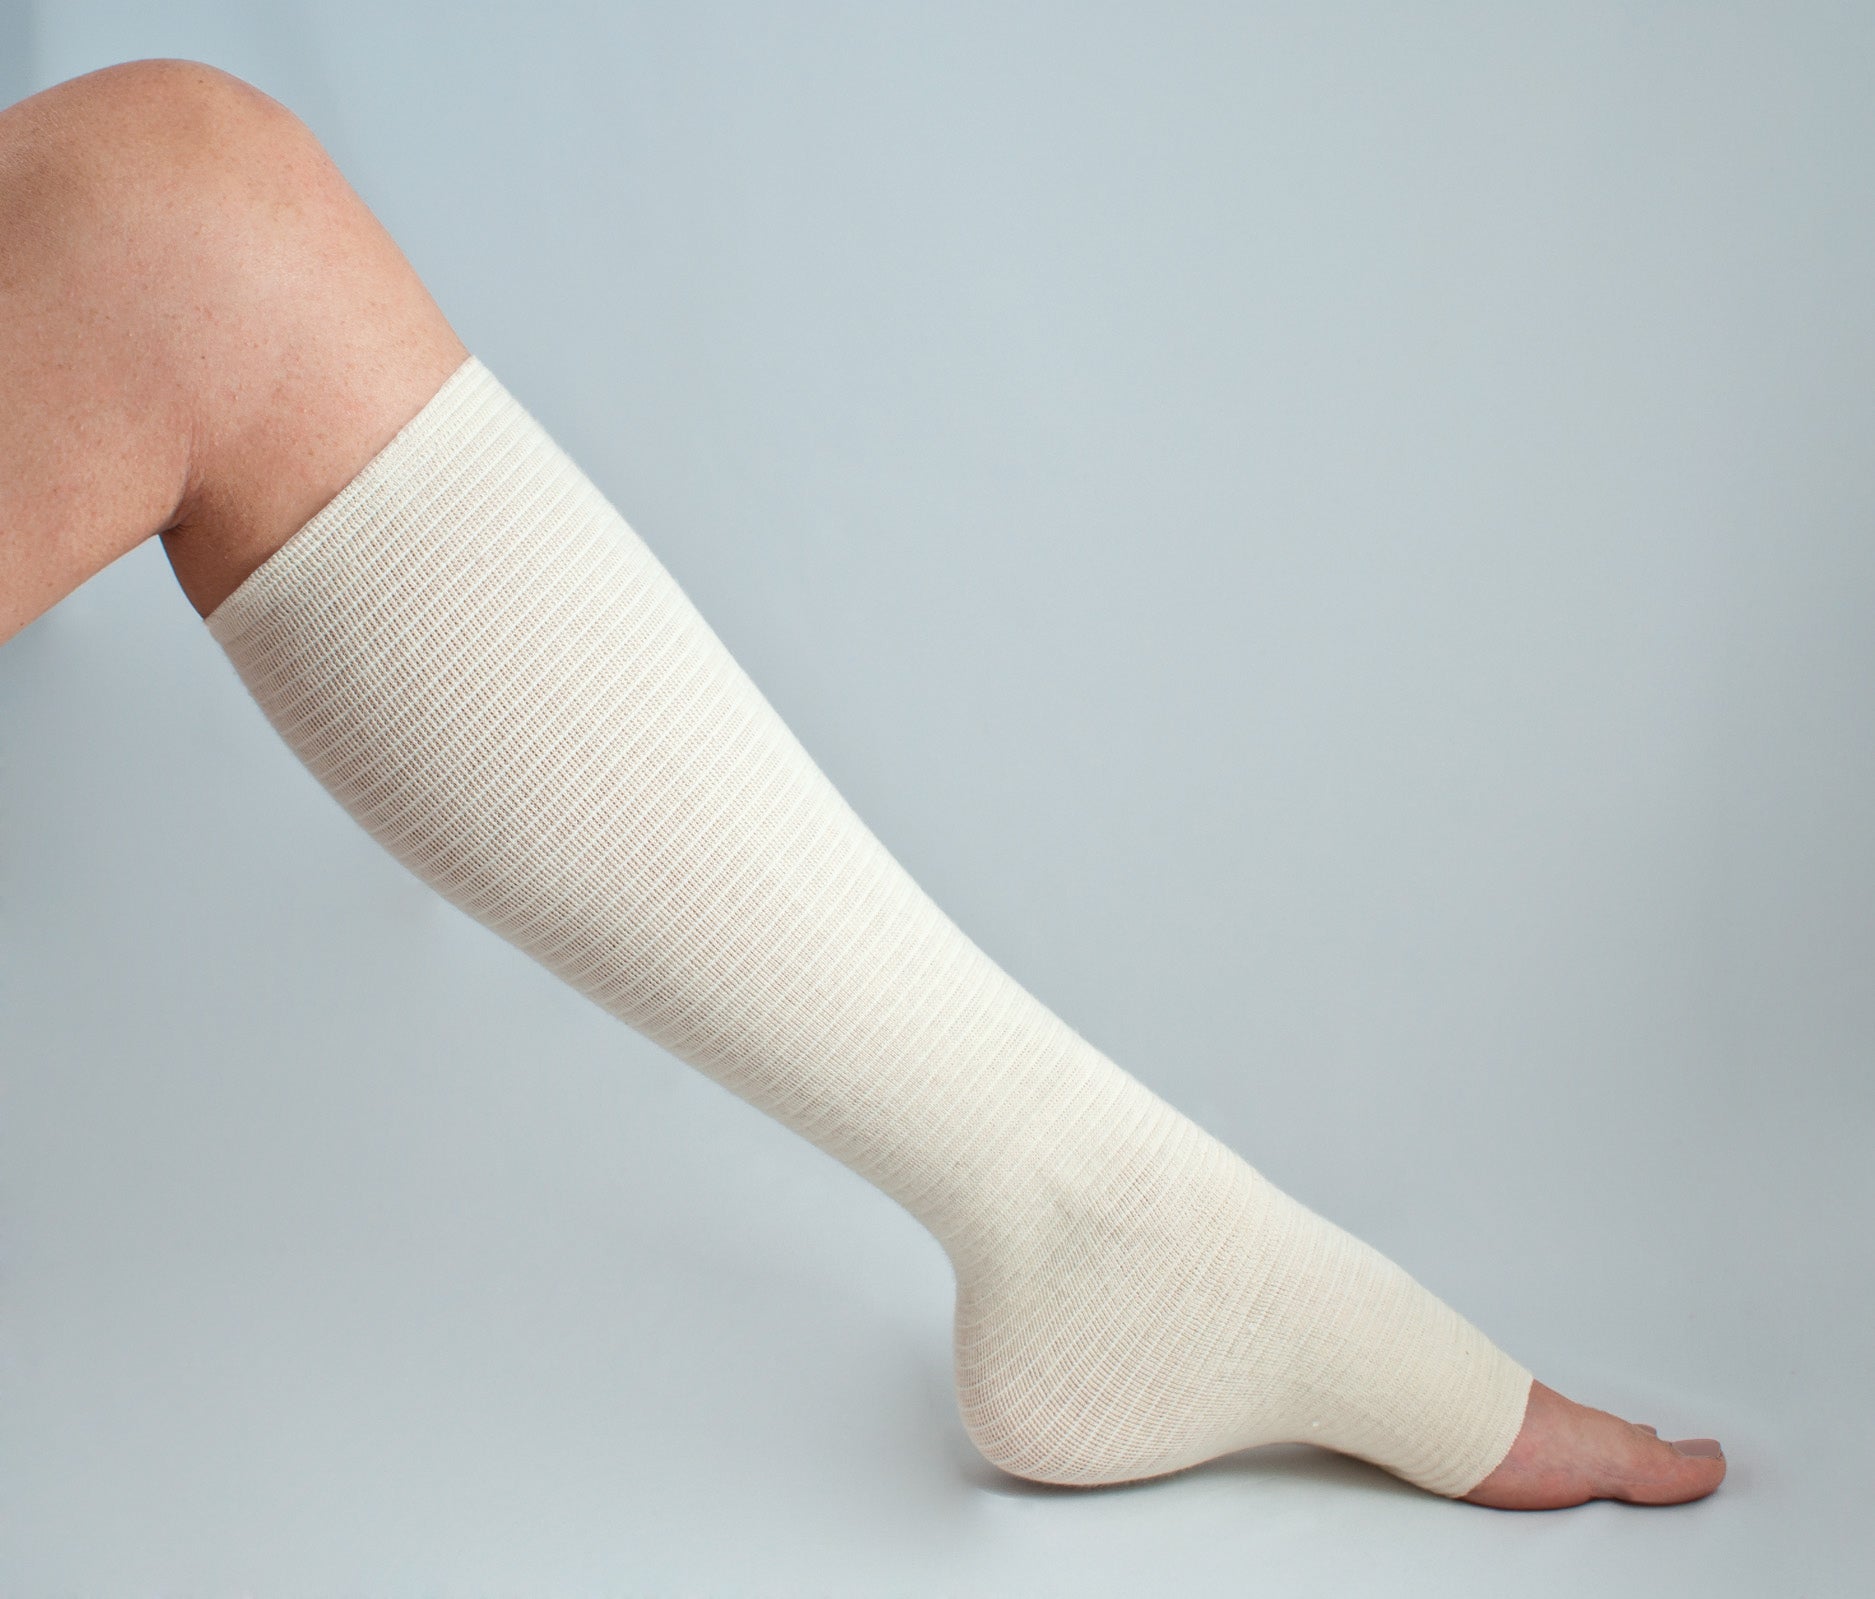 EA/1 - Lohamann & Rauscher tg&reg; Shape Tubular Bandage XL, Full Leg, 16-1/4" to 17-3/4" Calf Circumference - Best Buy Medical Supplies